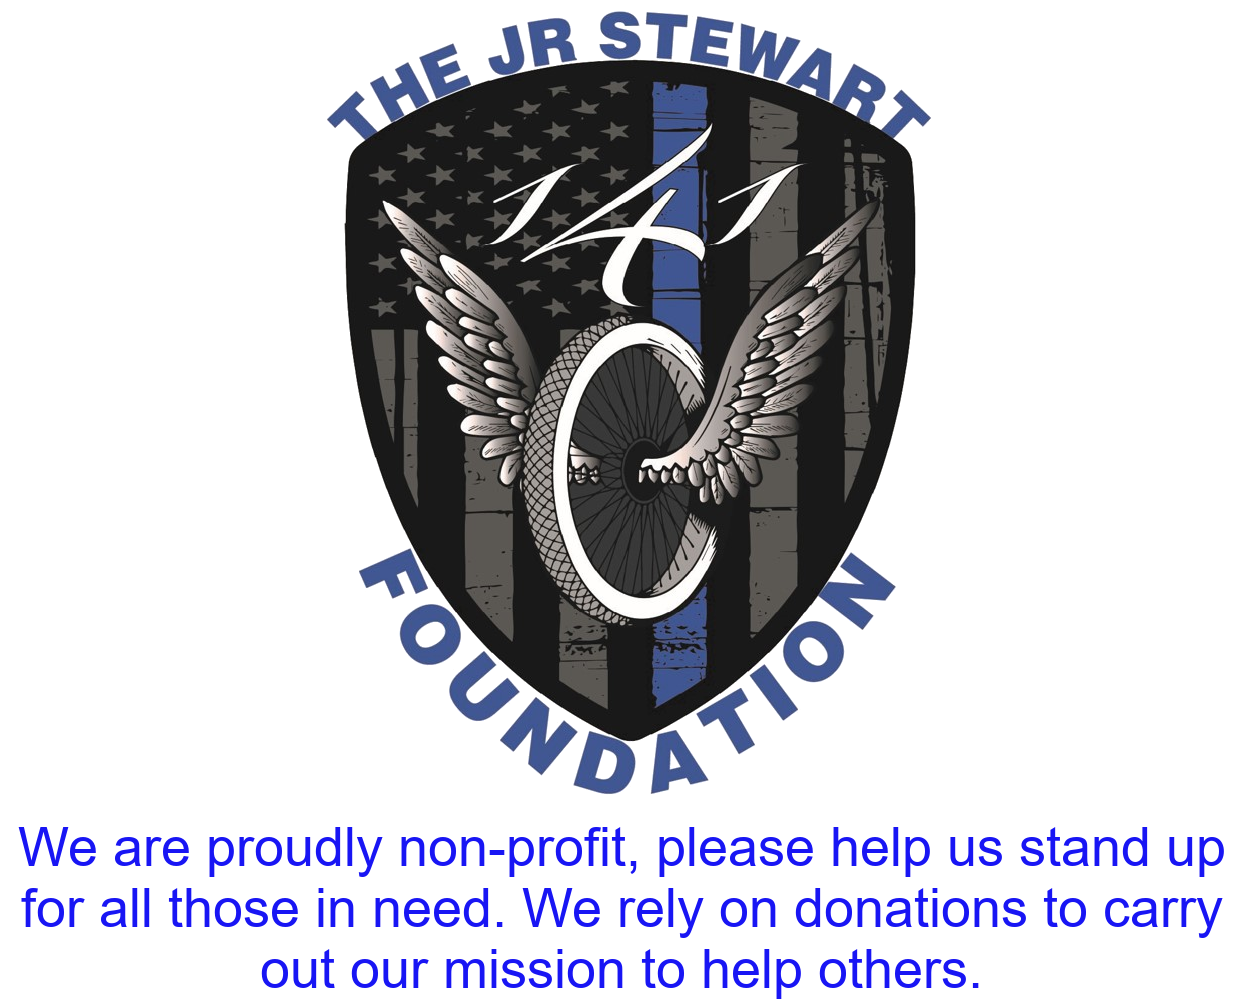 The JR Stewart 141 Foundation